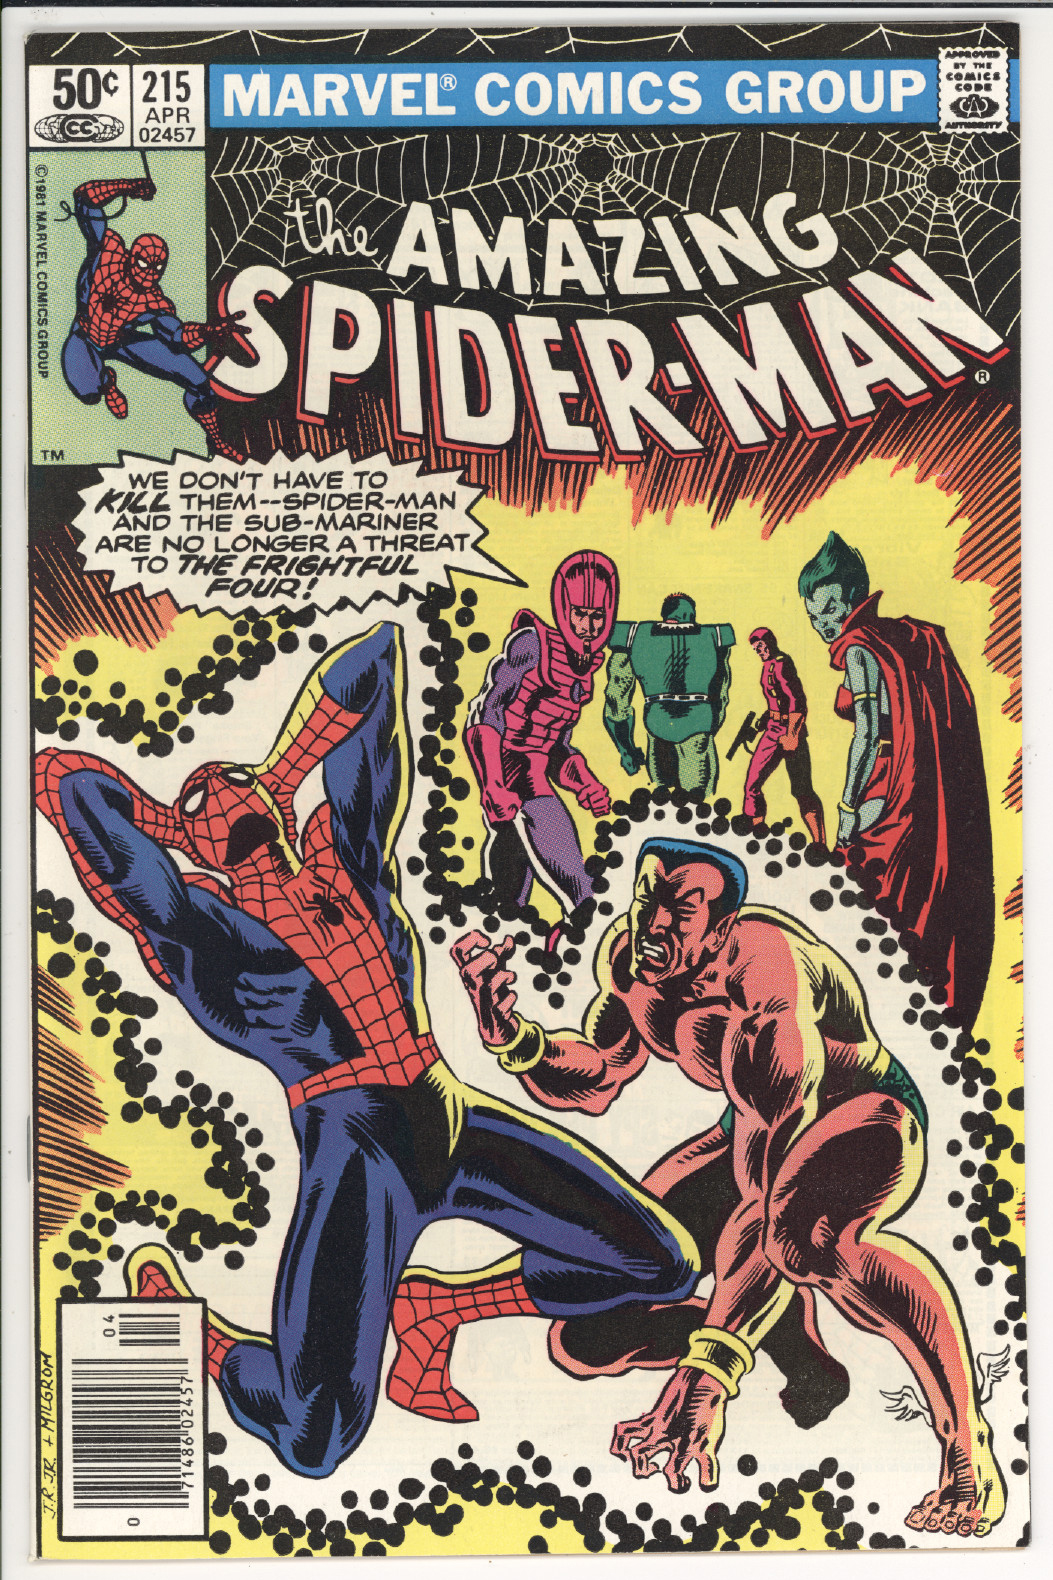 Amazing Spider-Man #215 front